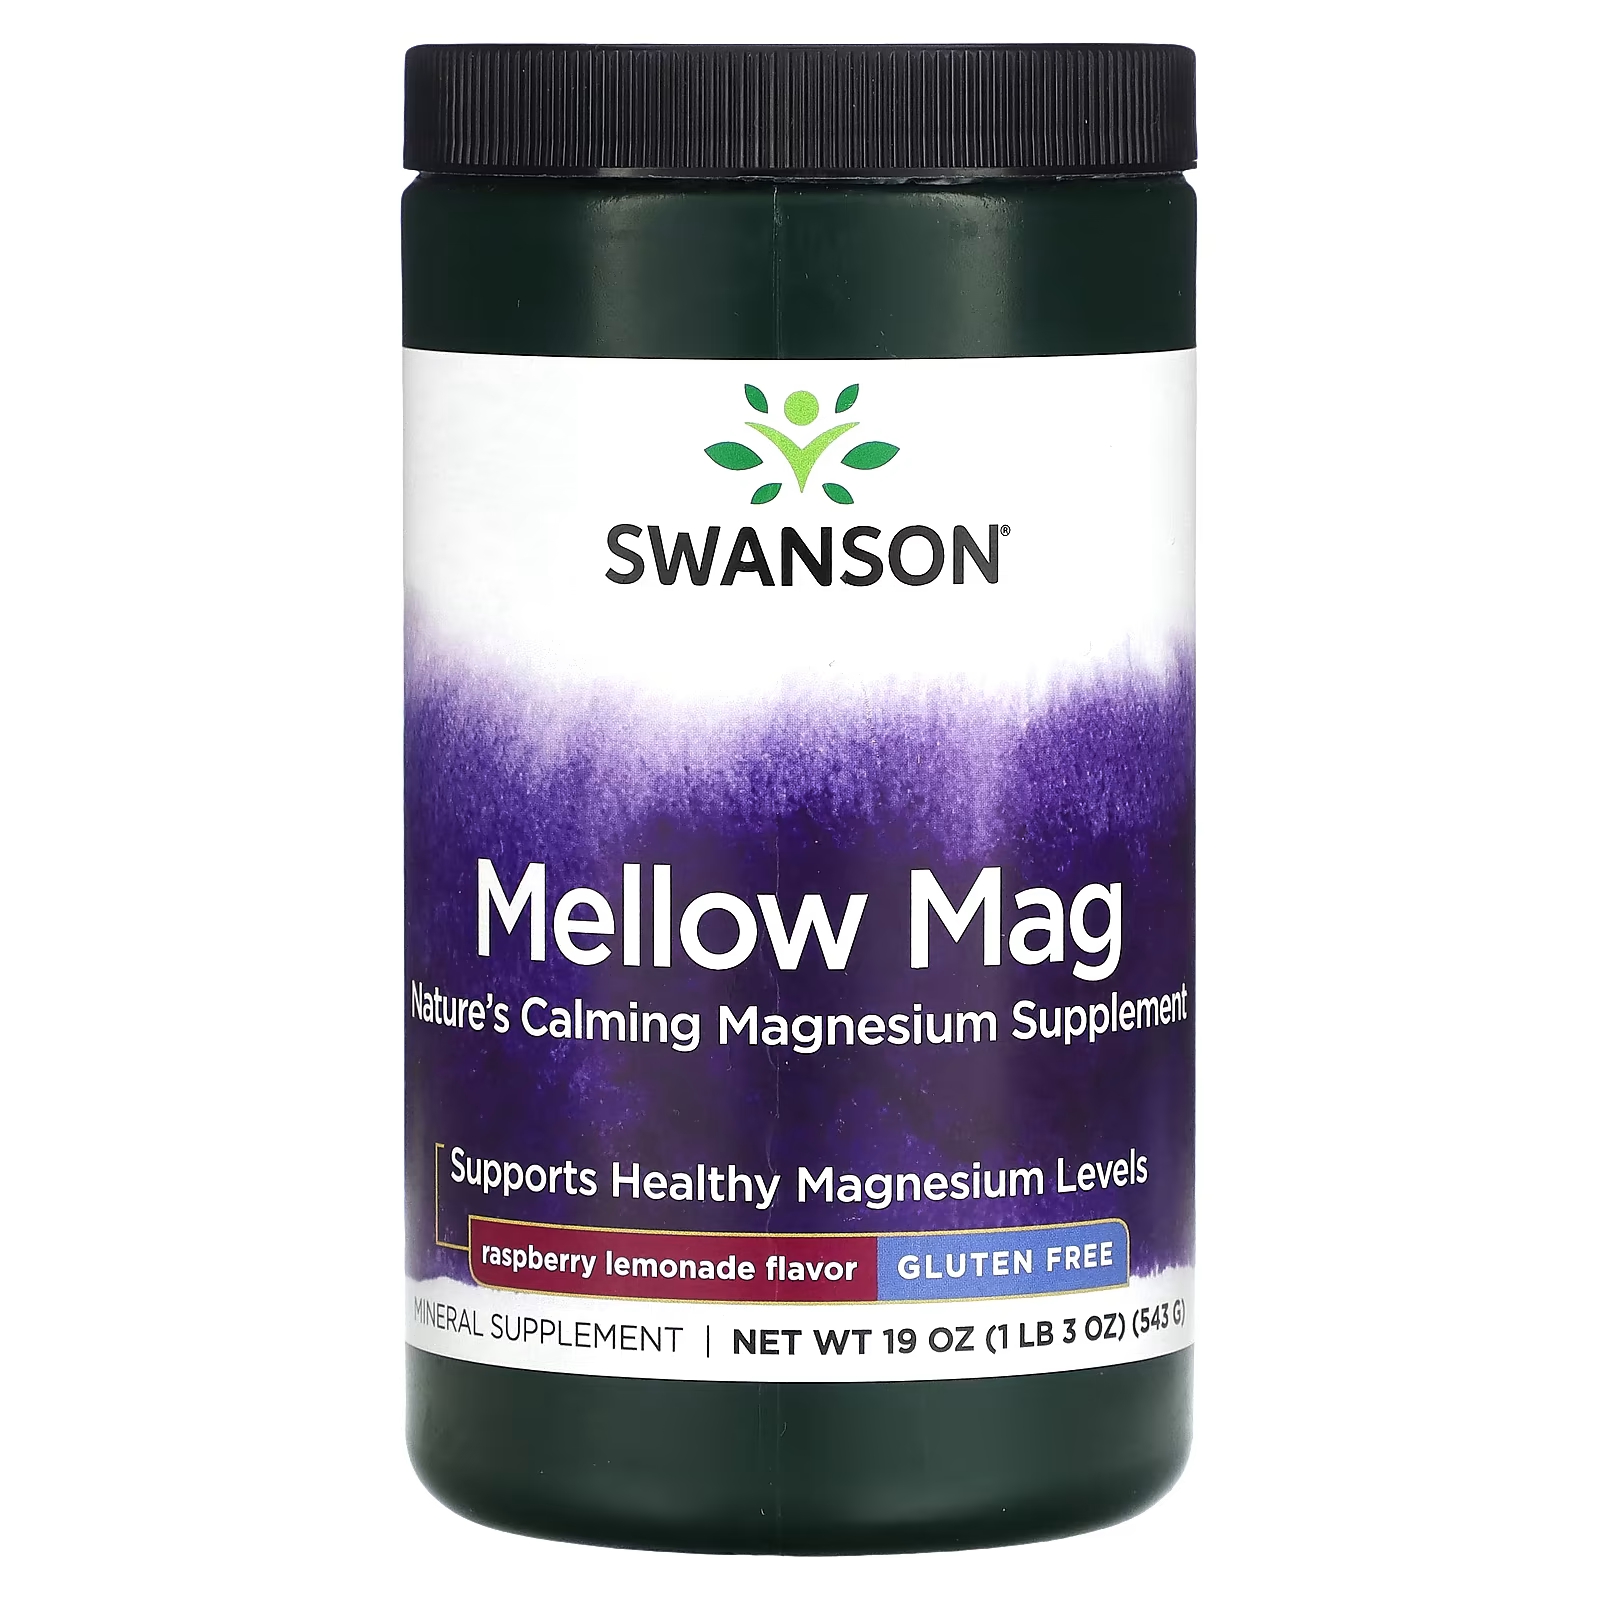 Пищевая добавка Swanson Mellow Mag со вкусом малинового лимонада, 554 г swanson mellow mag апельсин 554 г 20 унций